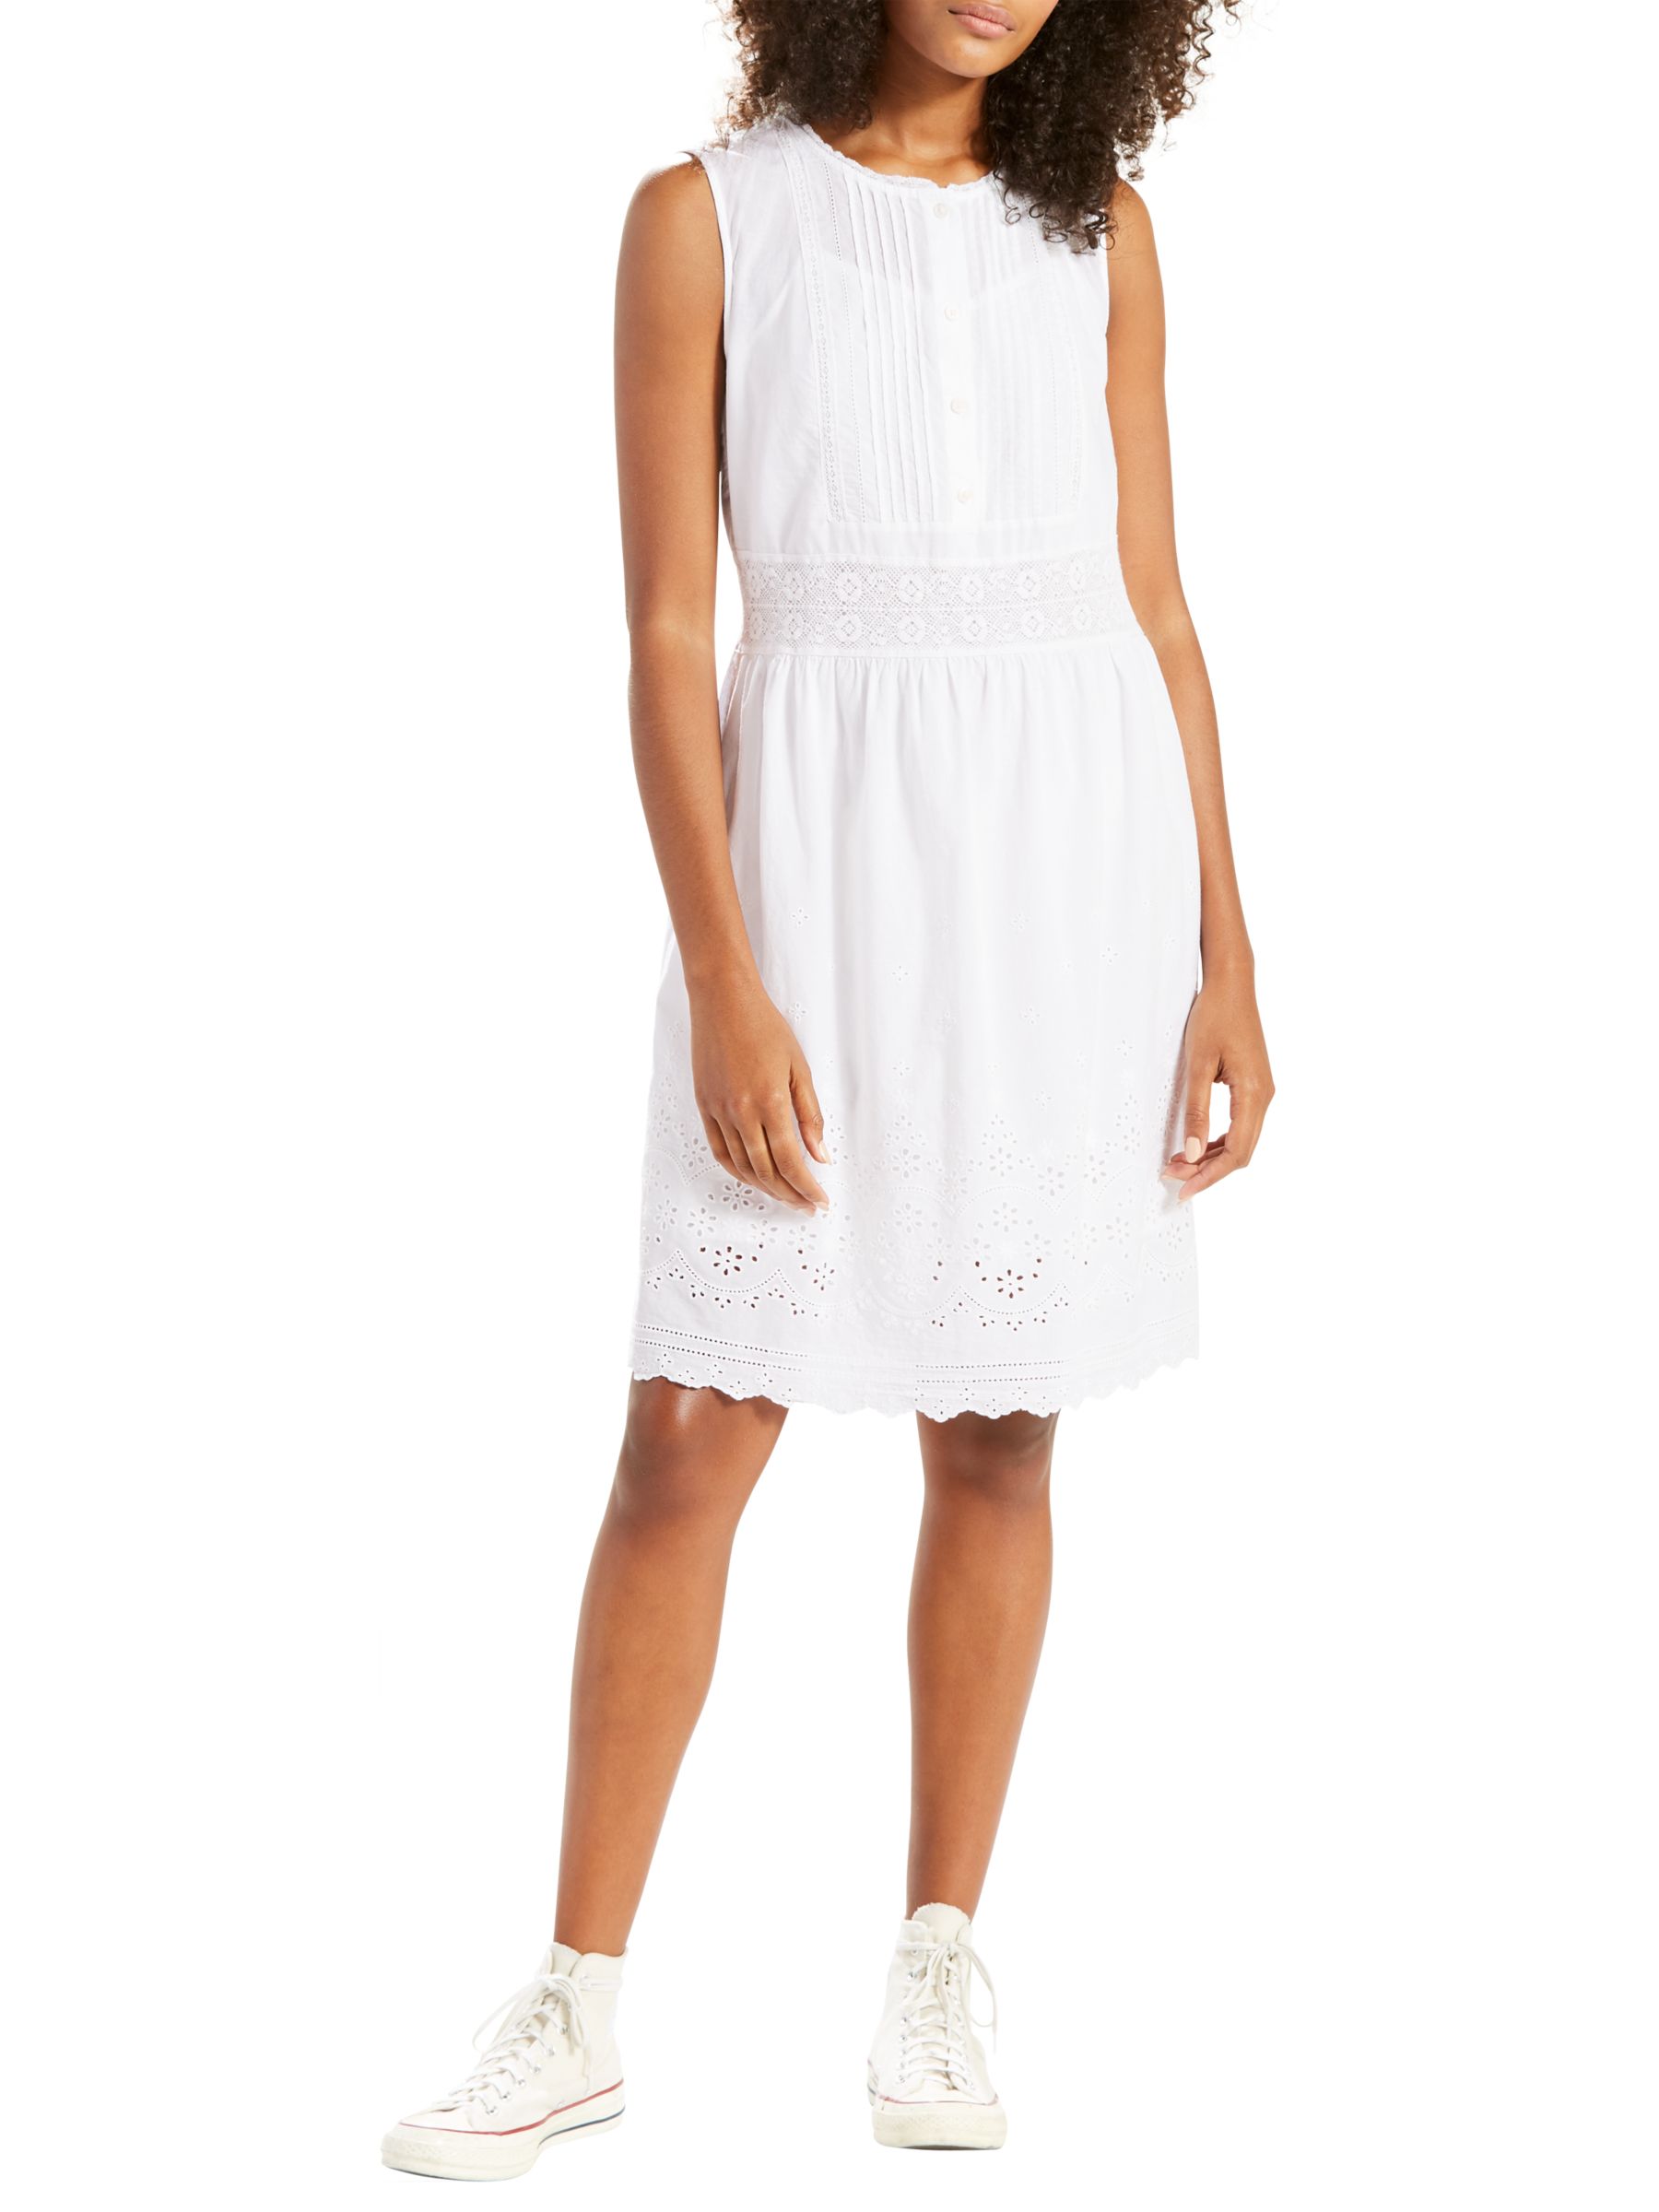 levis white dress